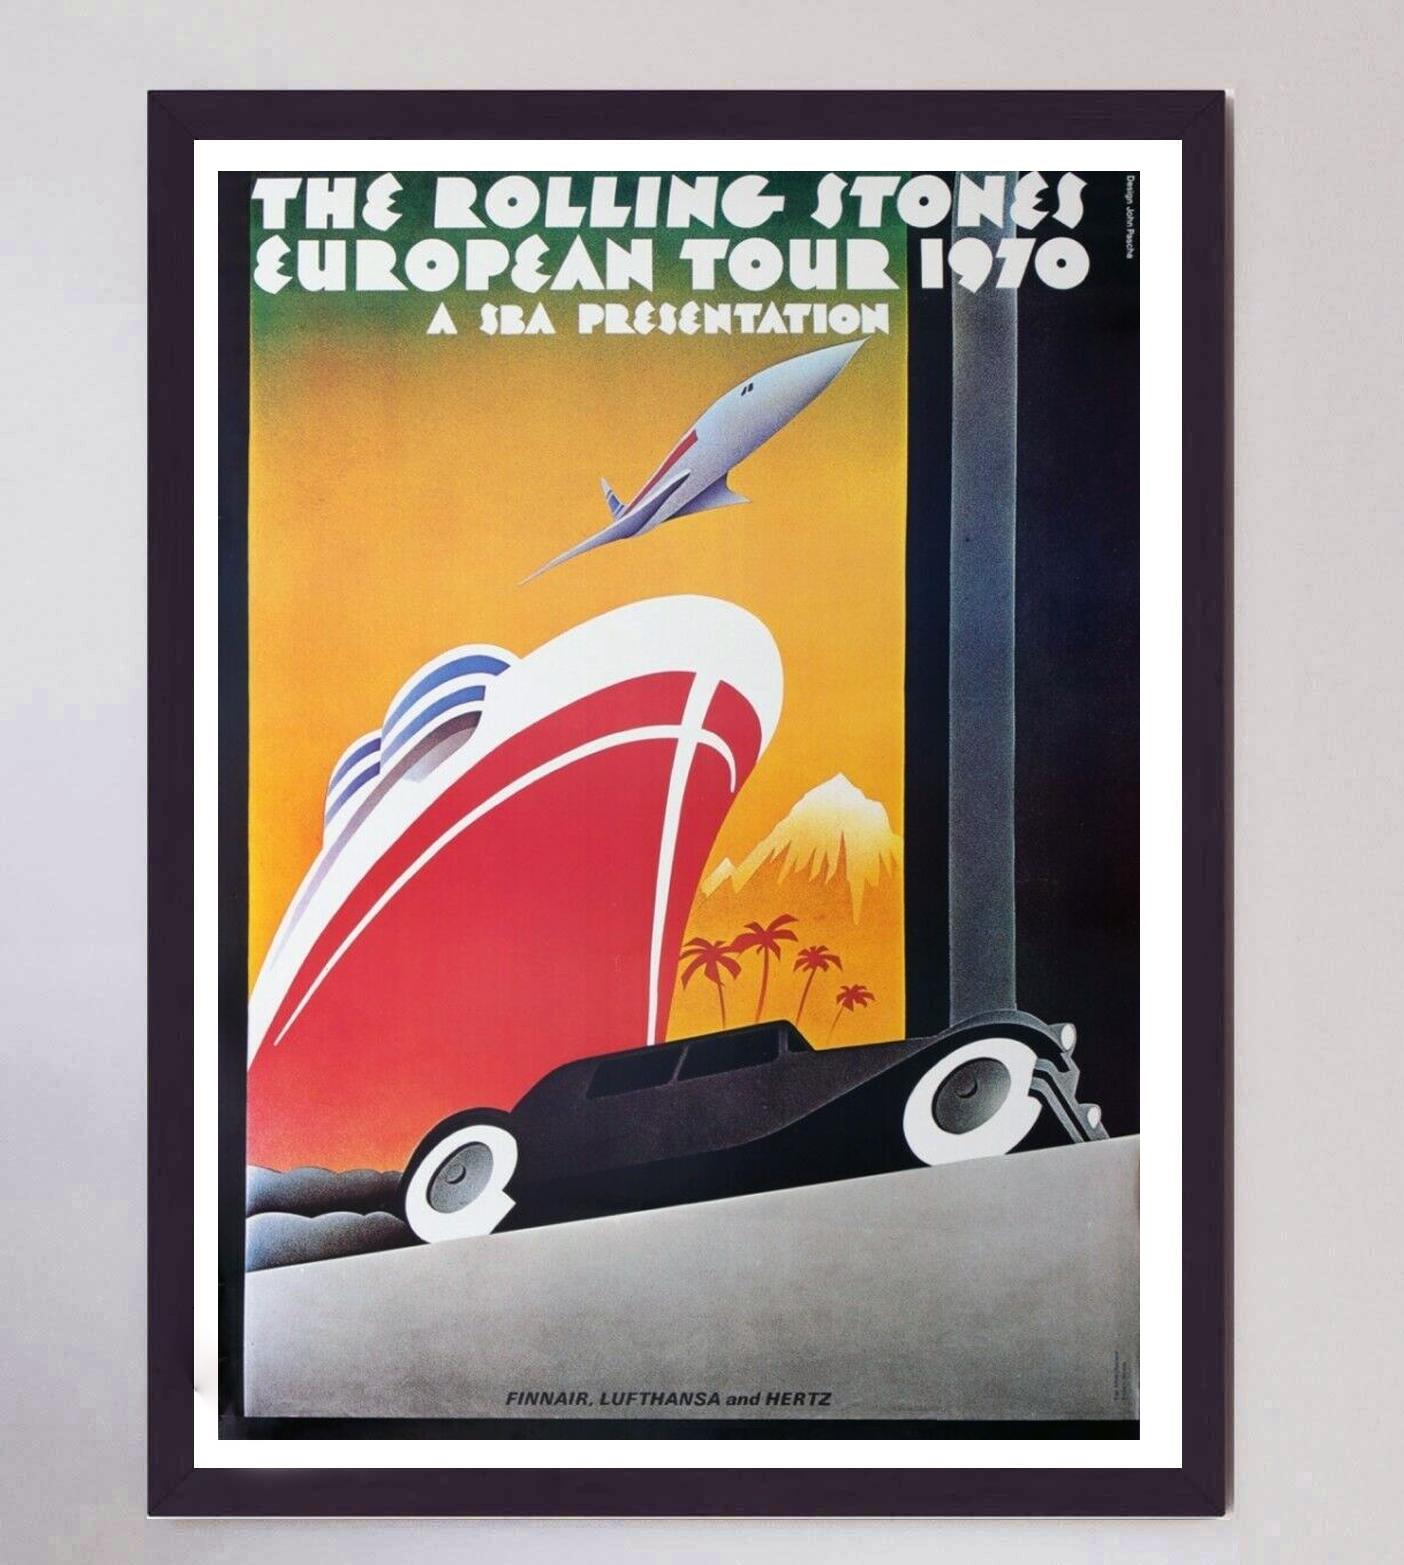 1970s concert poster